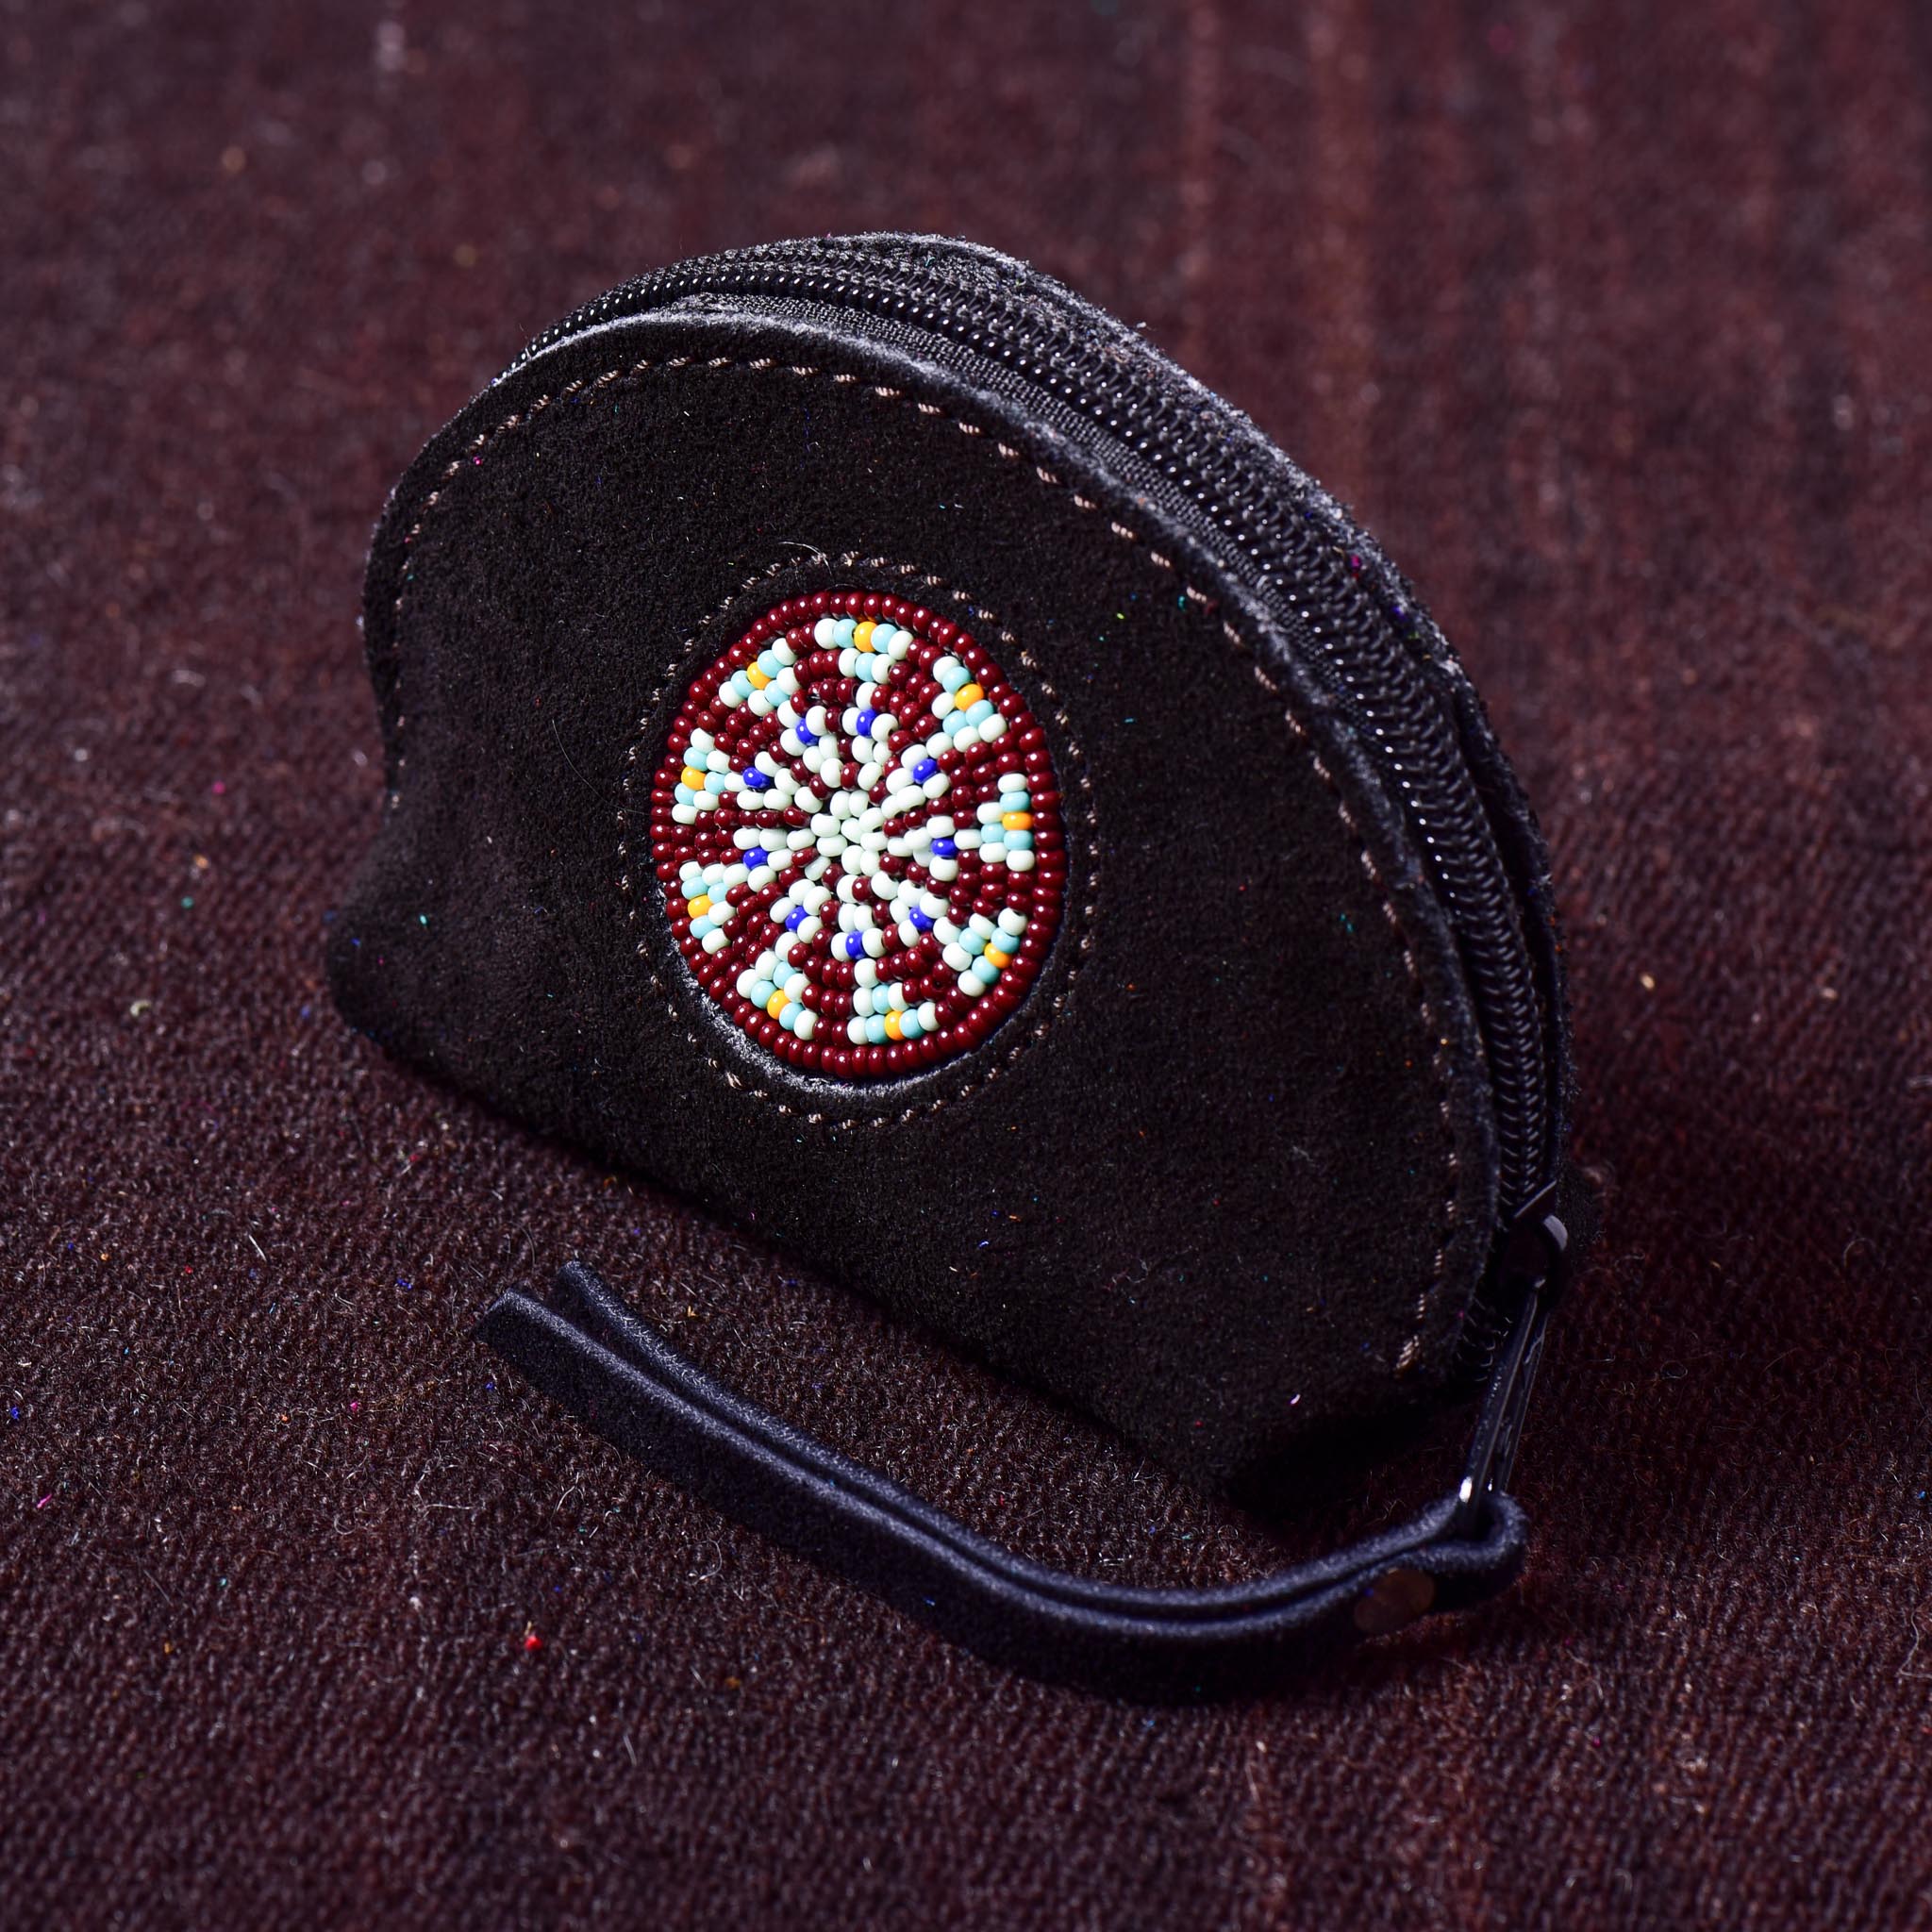 Andino Redondo - Otavalo Leather Beads Embroidery Purse Black Star